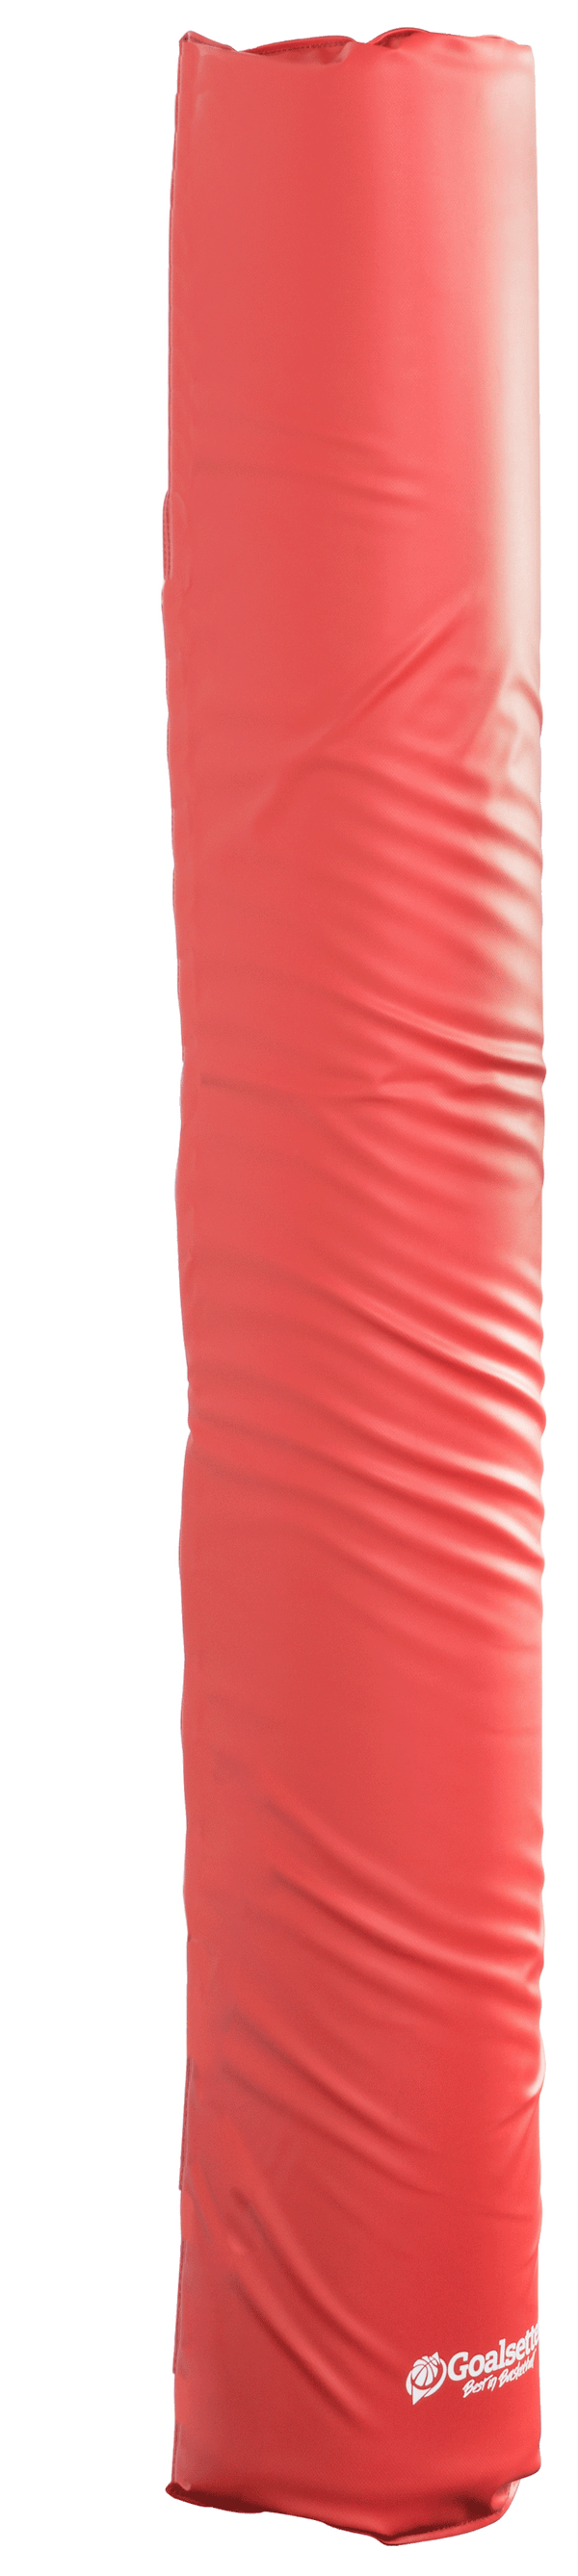 Goalsetter Wrap around basketball Pole Padding (5-6" Poles) - Red_1